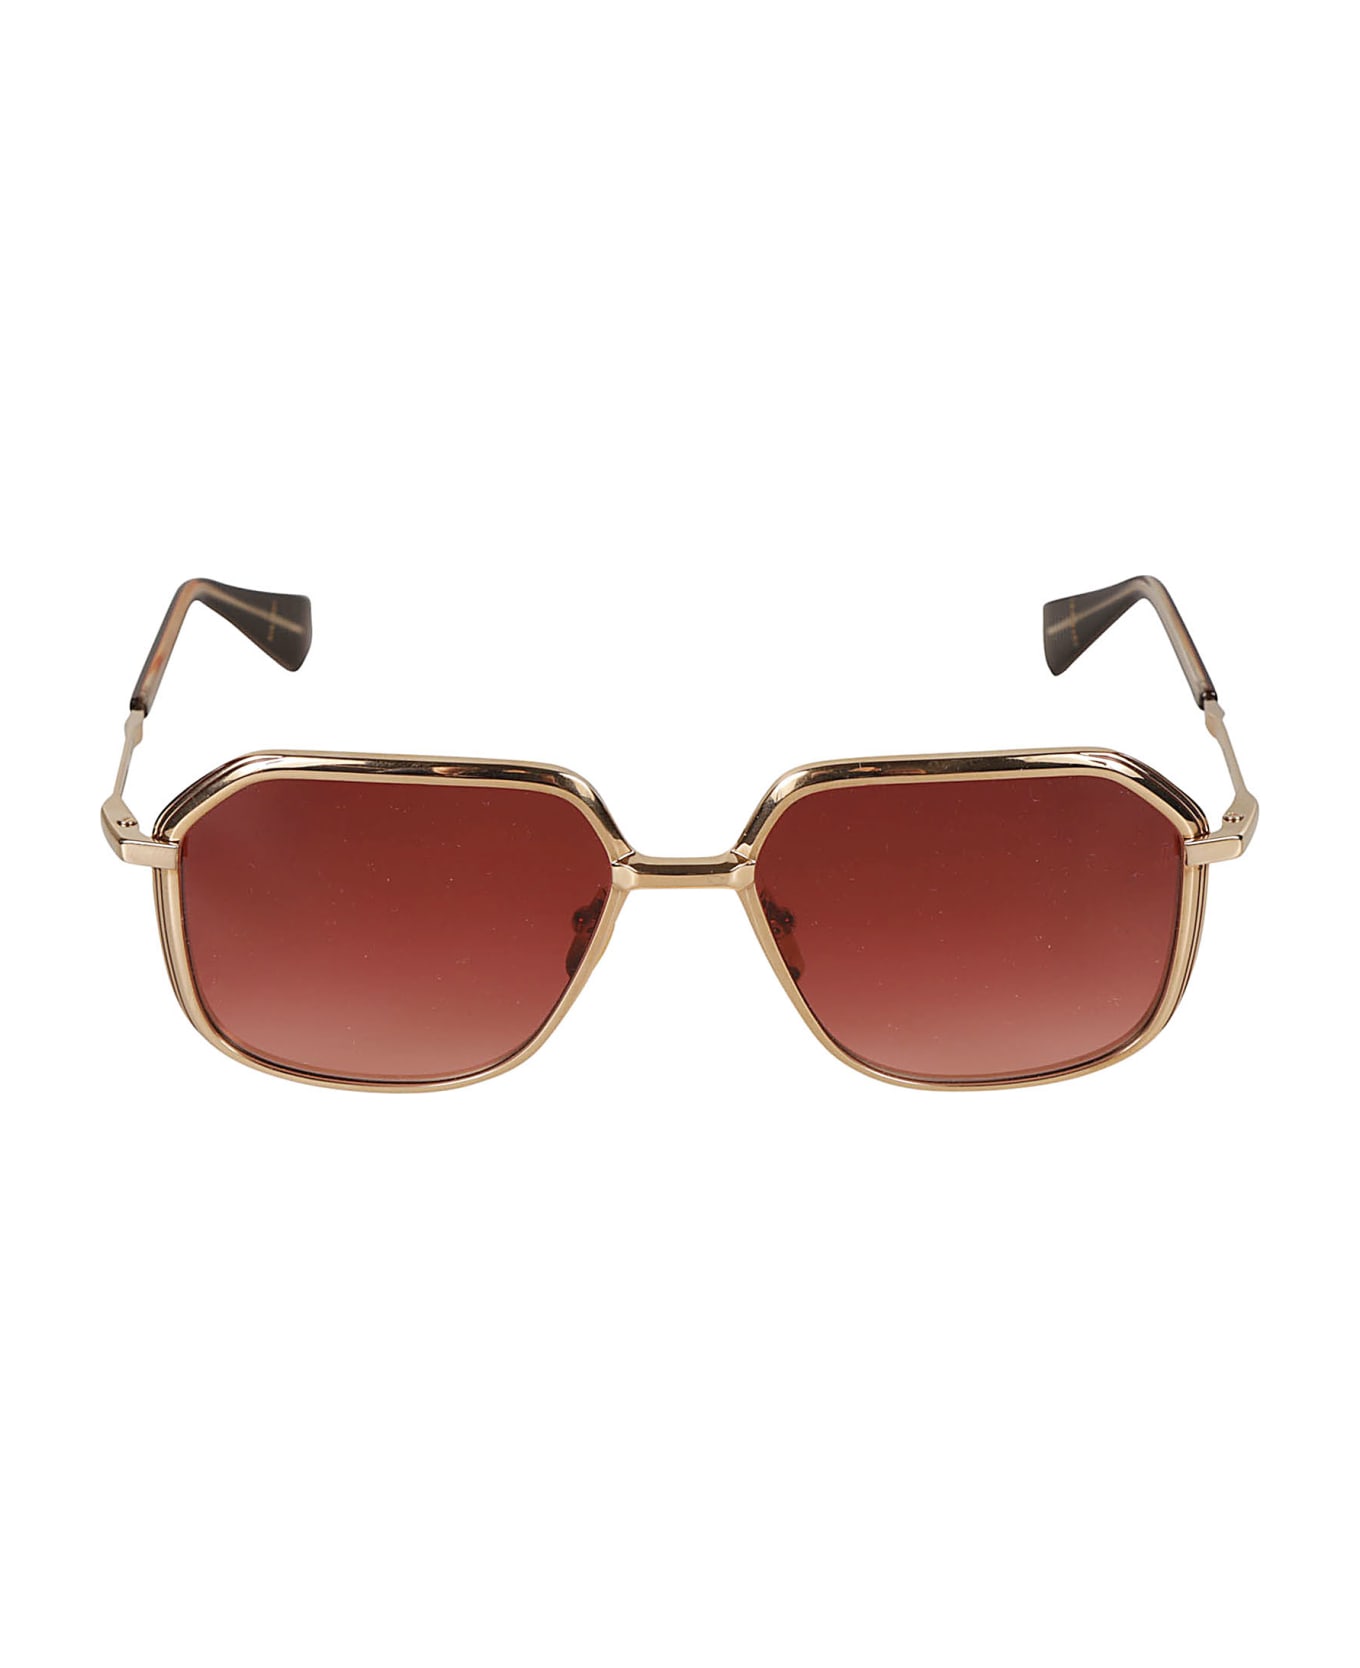 Jacques Marie Mage Aida Sunglasses Sunglasses - gold サングラス